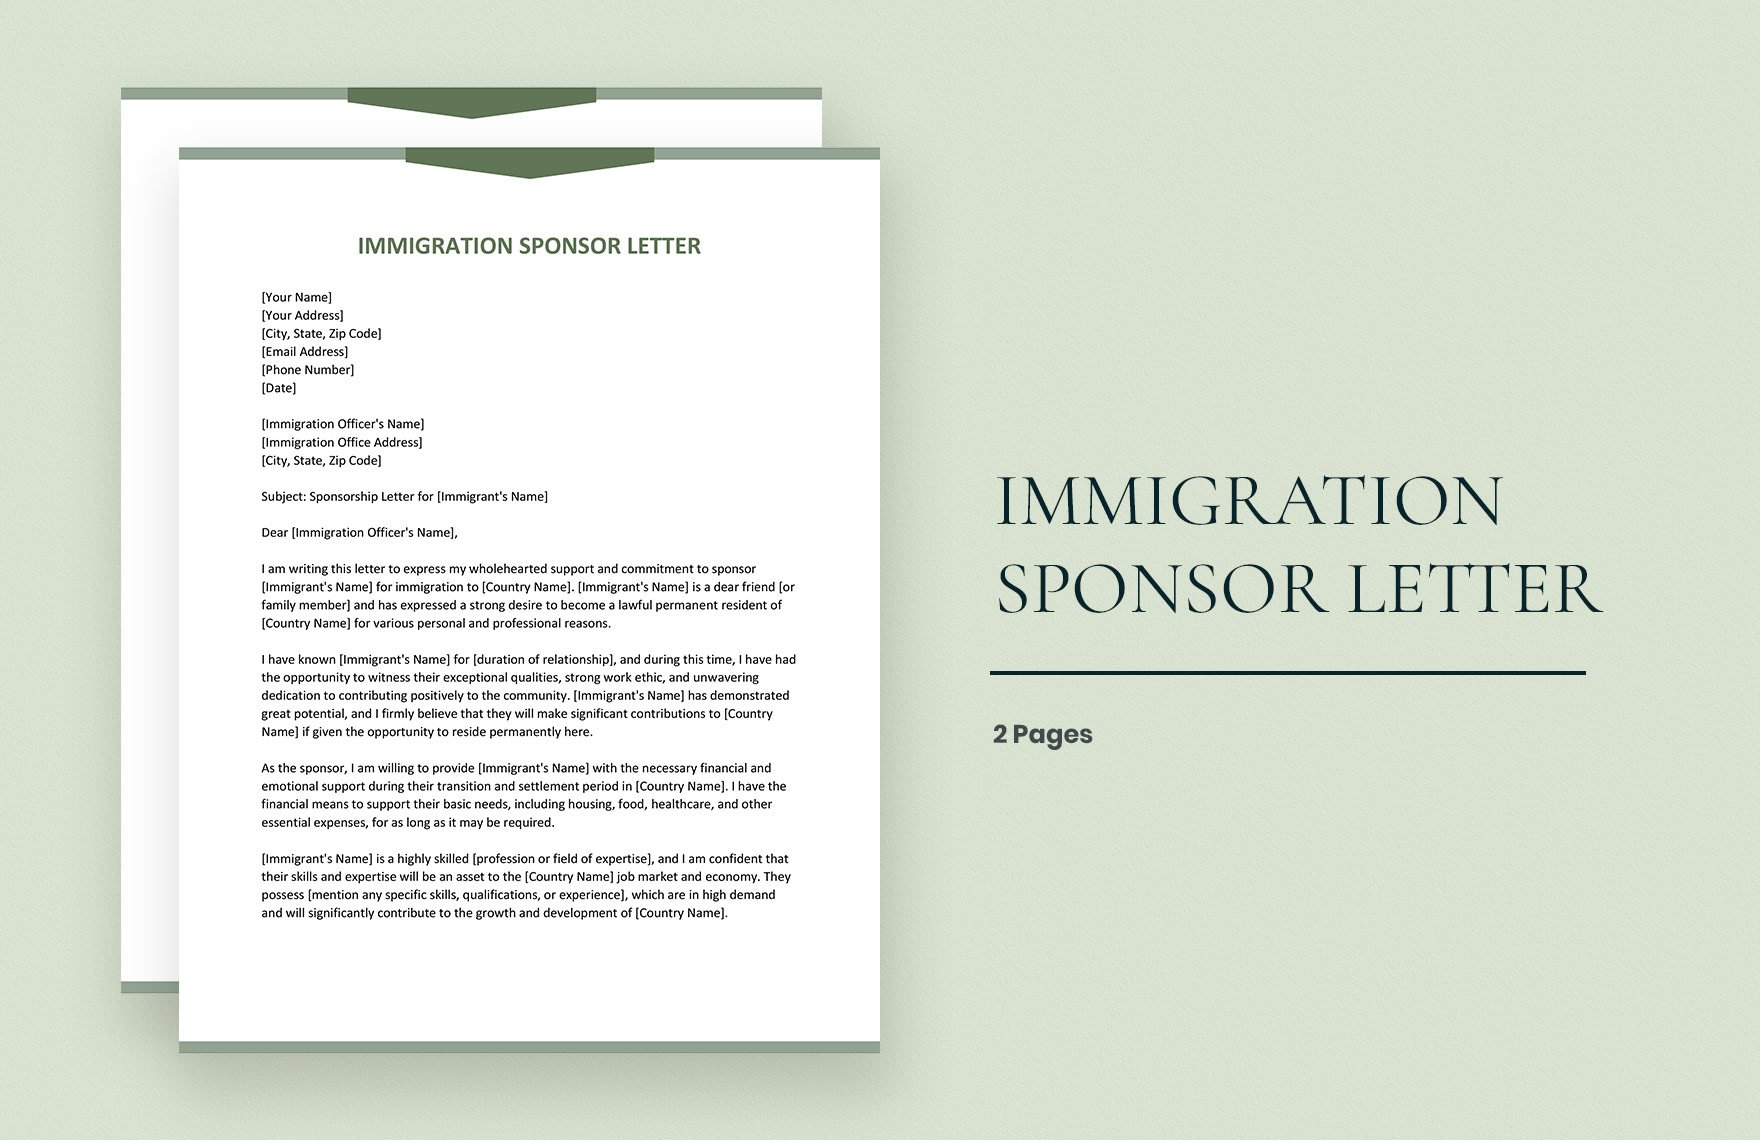 Immigration Sponsor Letter in Word, Google Docs, Apple Pages